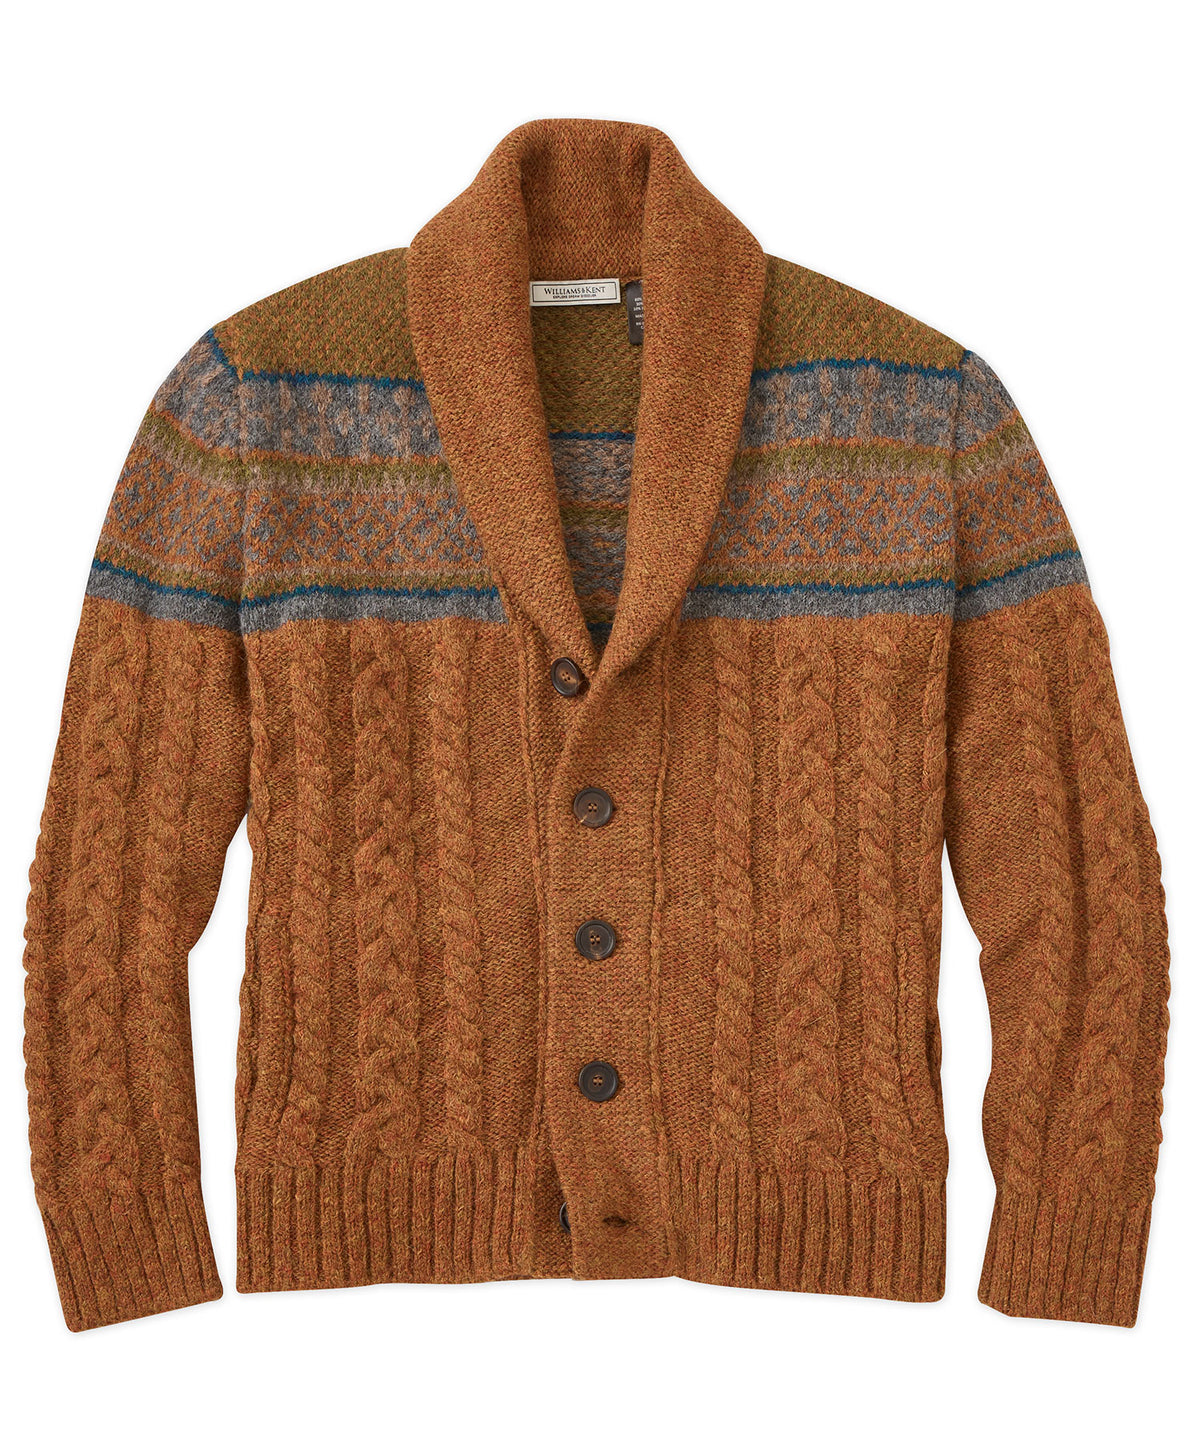 Baby Alpaca Fair Isle Cardigan Sweater